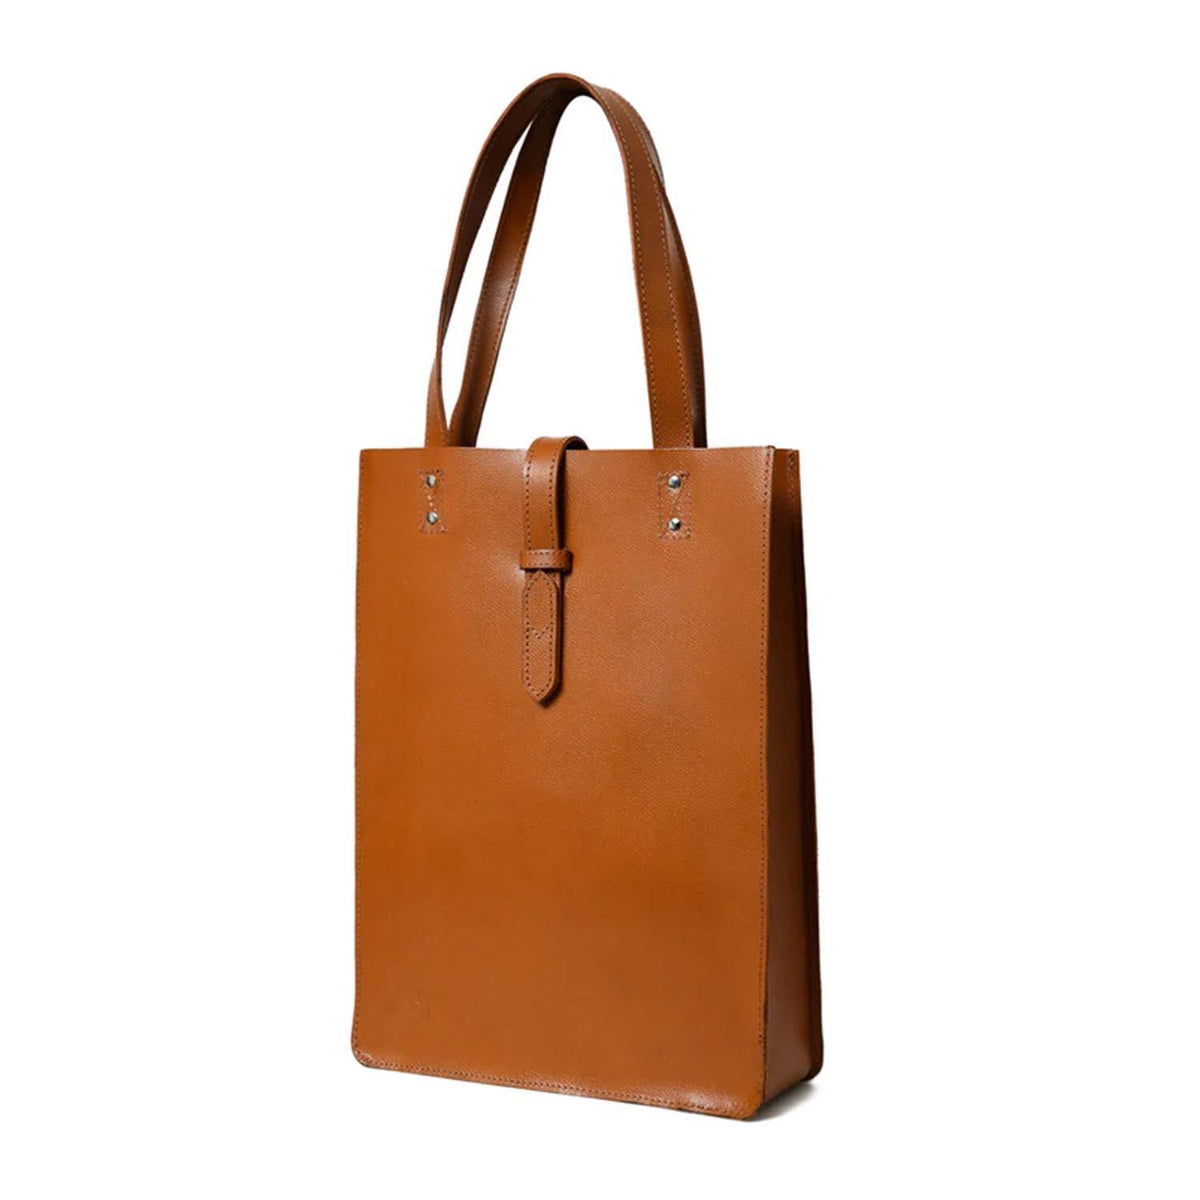 Chestnut Elegance Women's Leather Tote Bag